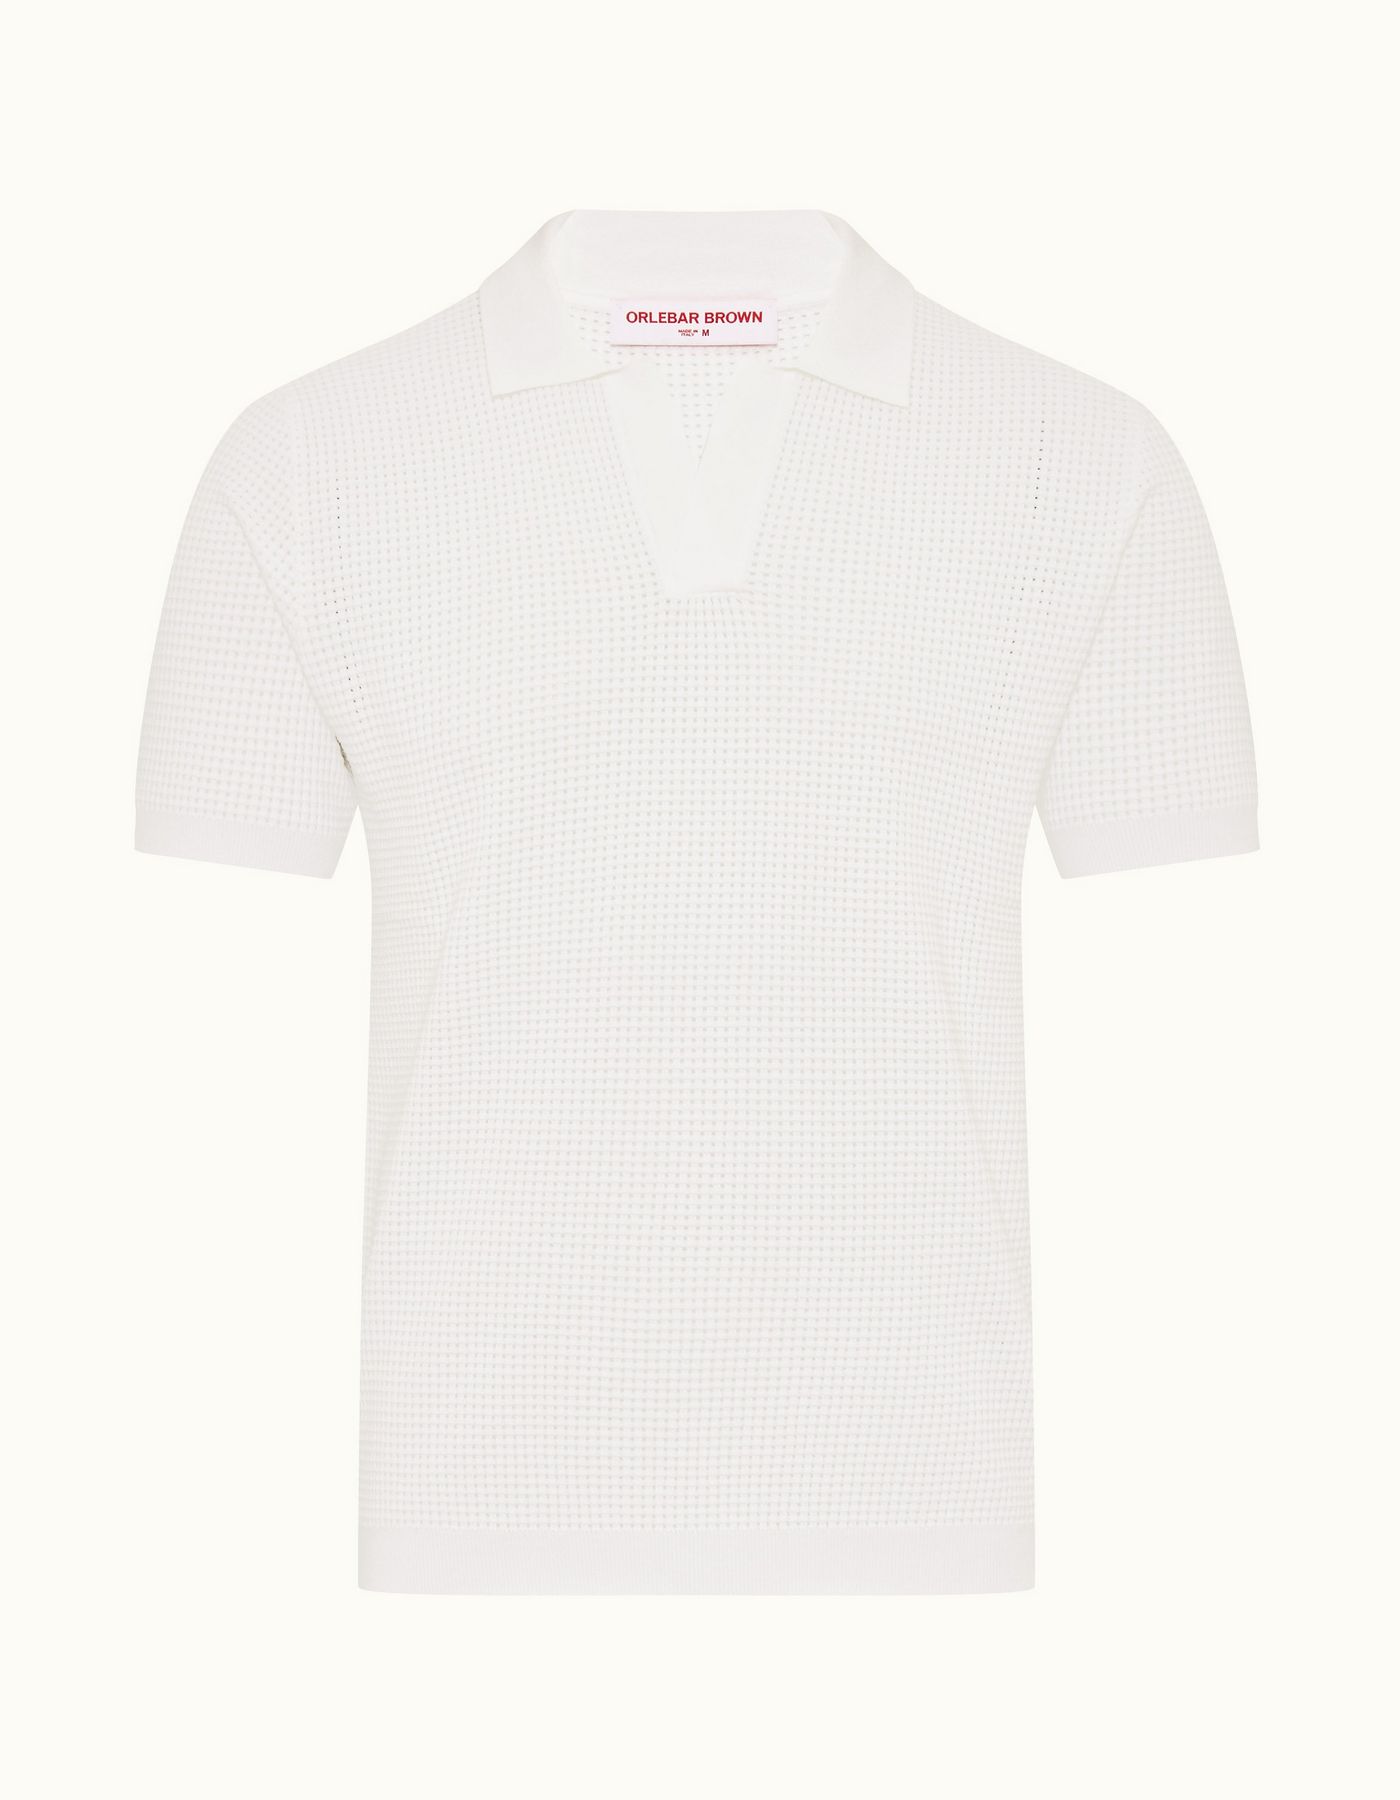 Roddy - Mens White Classic Fit Open Mesh Stitch Polo Shirt